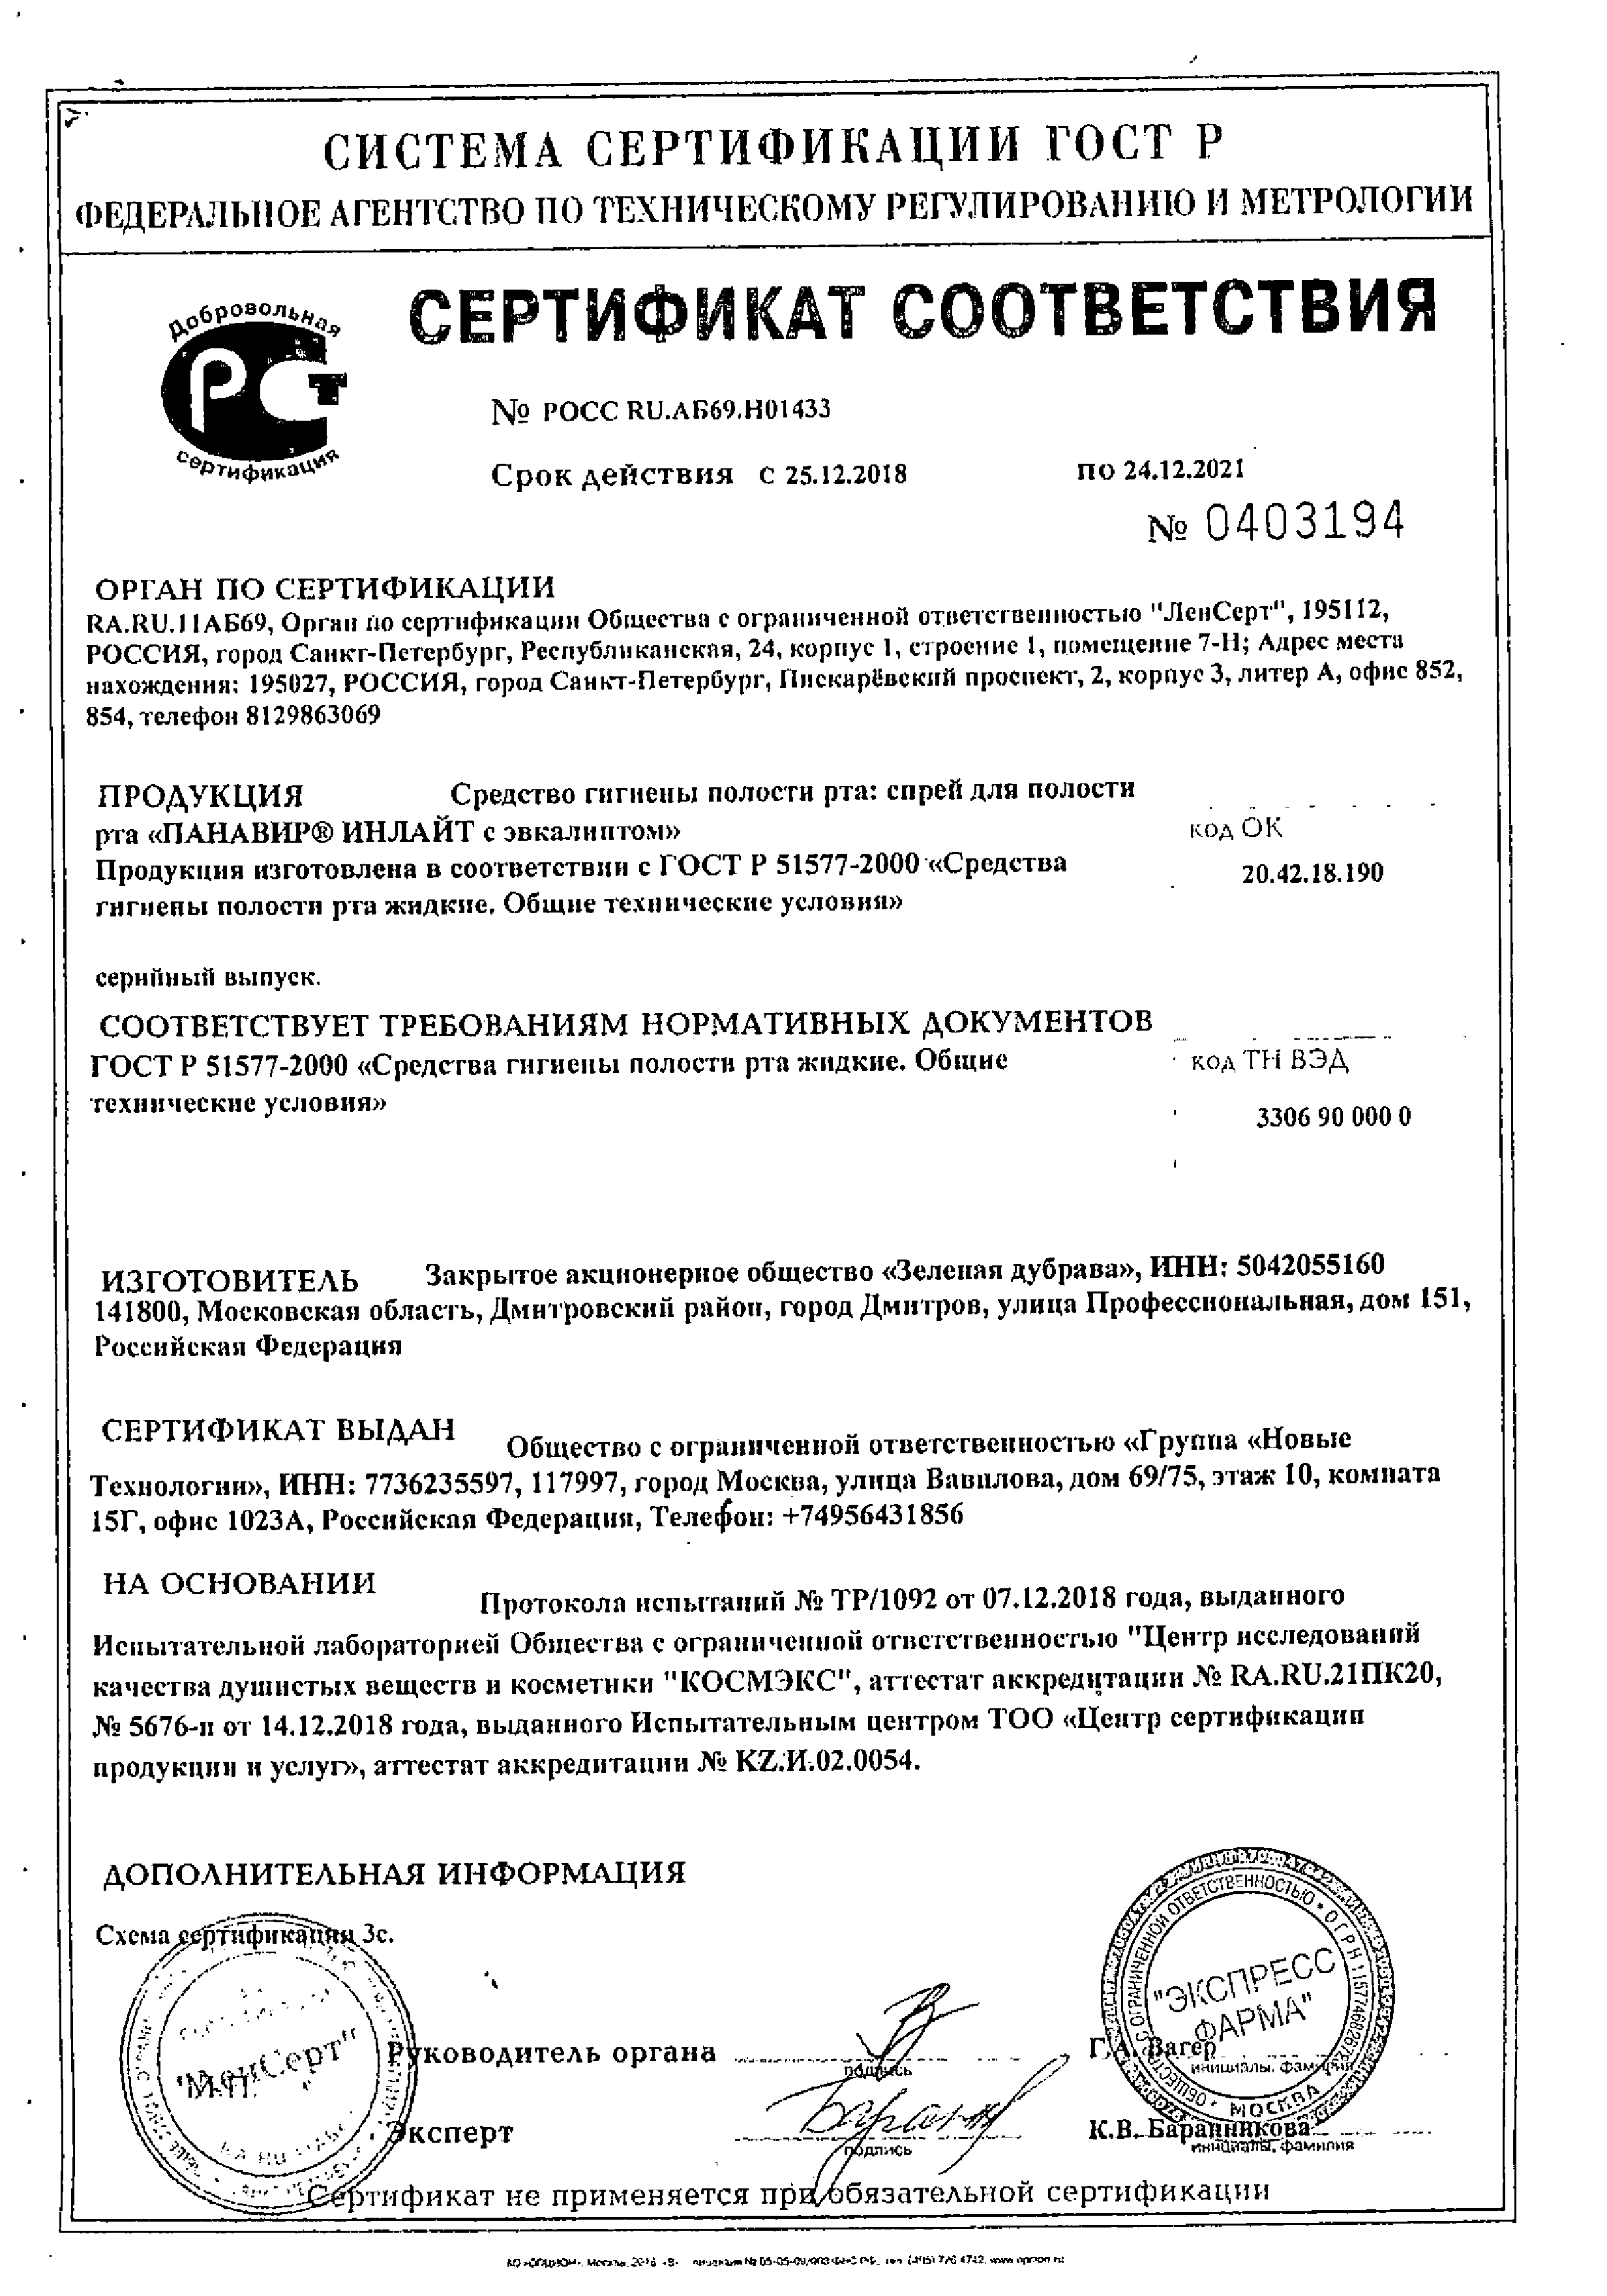 Панавир Инлайт с эвкалиптом сертификат